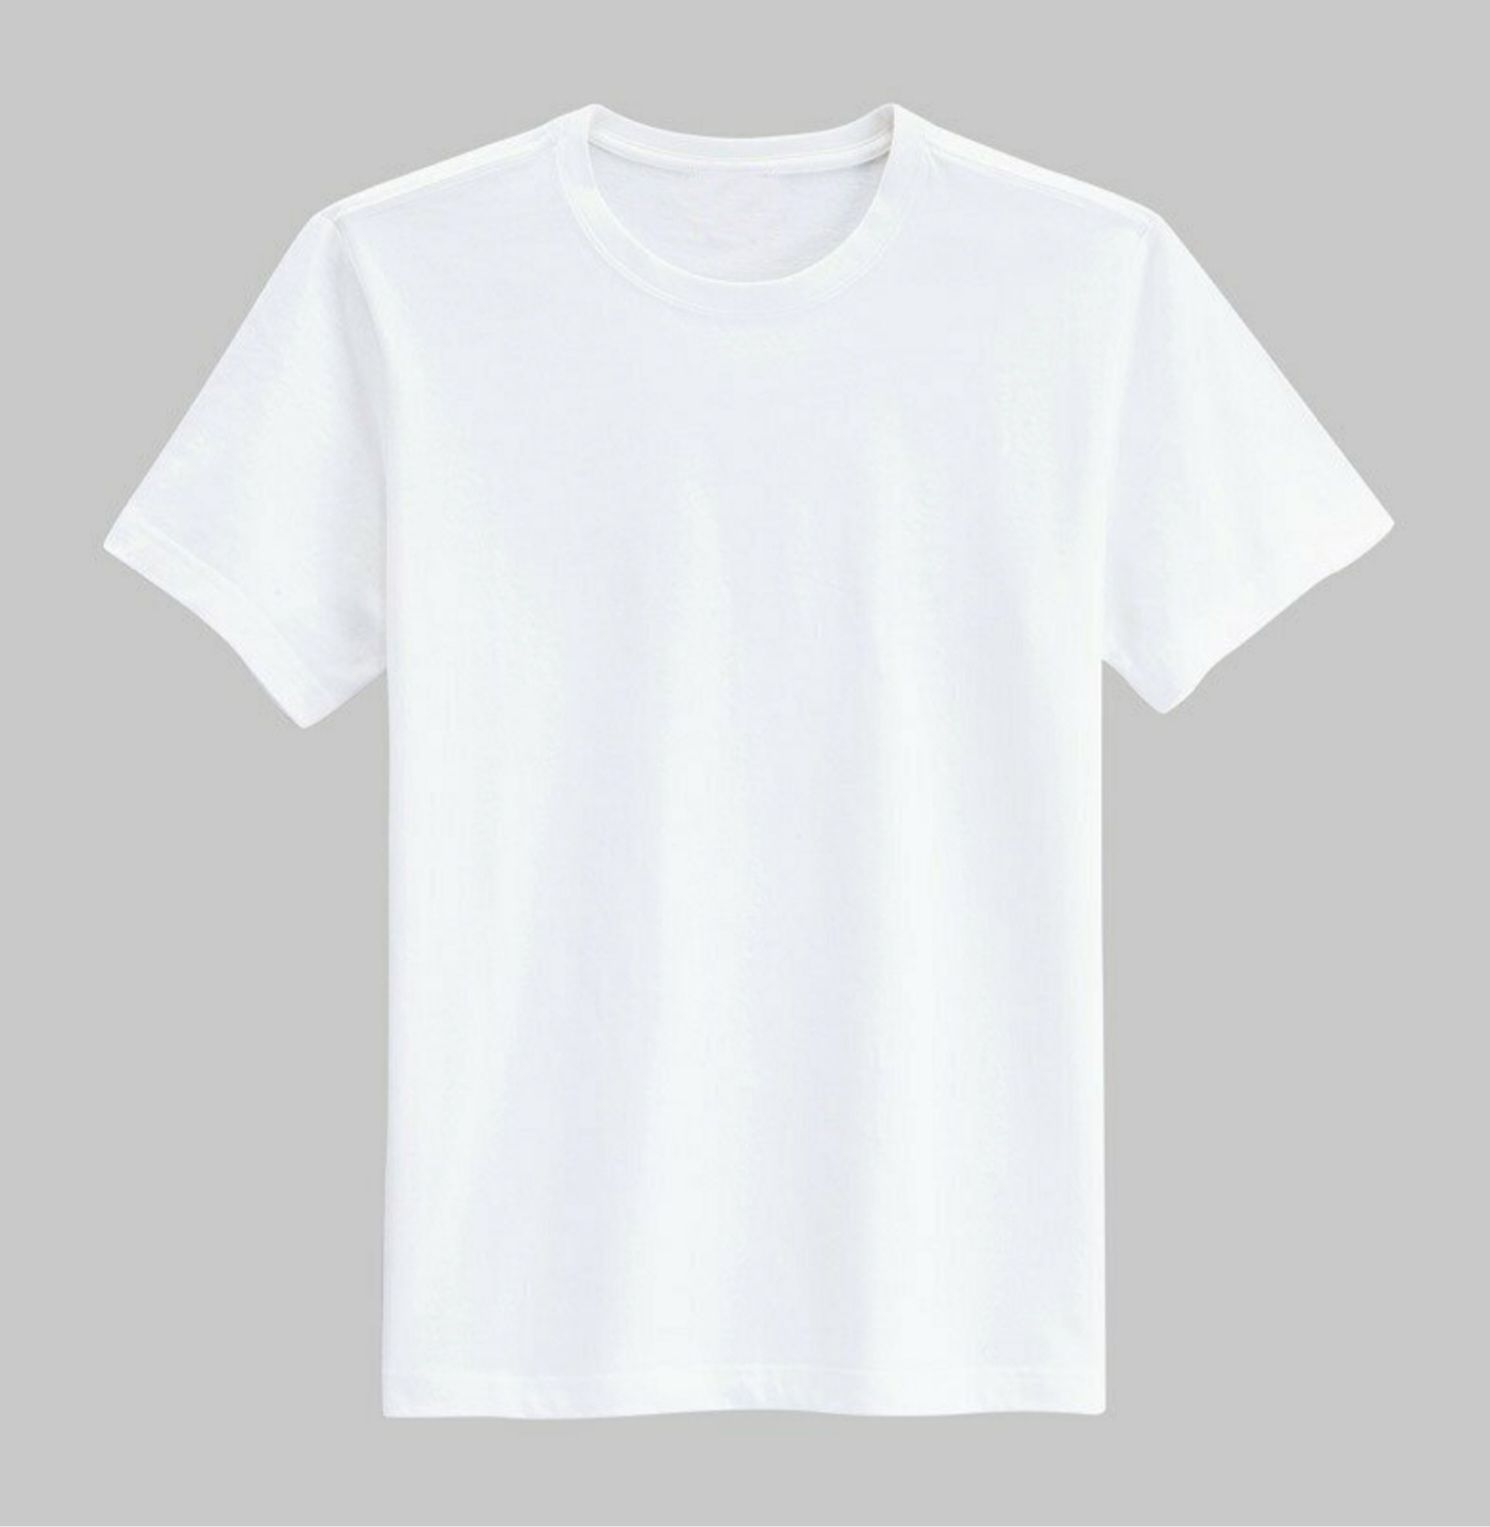 Футболка окпд. Белая футболка. Обычная белая футболка. Белая майка. Беллое футболка.